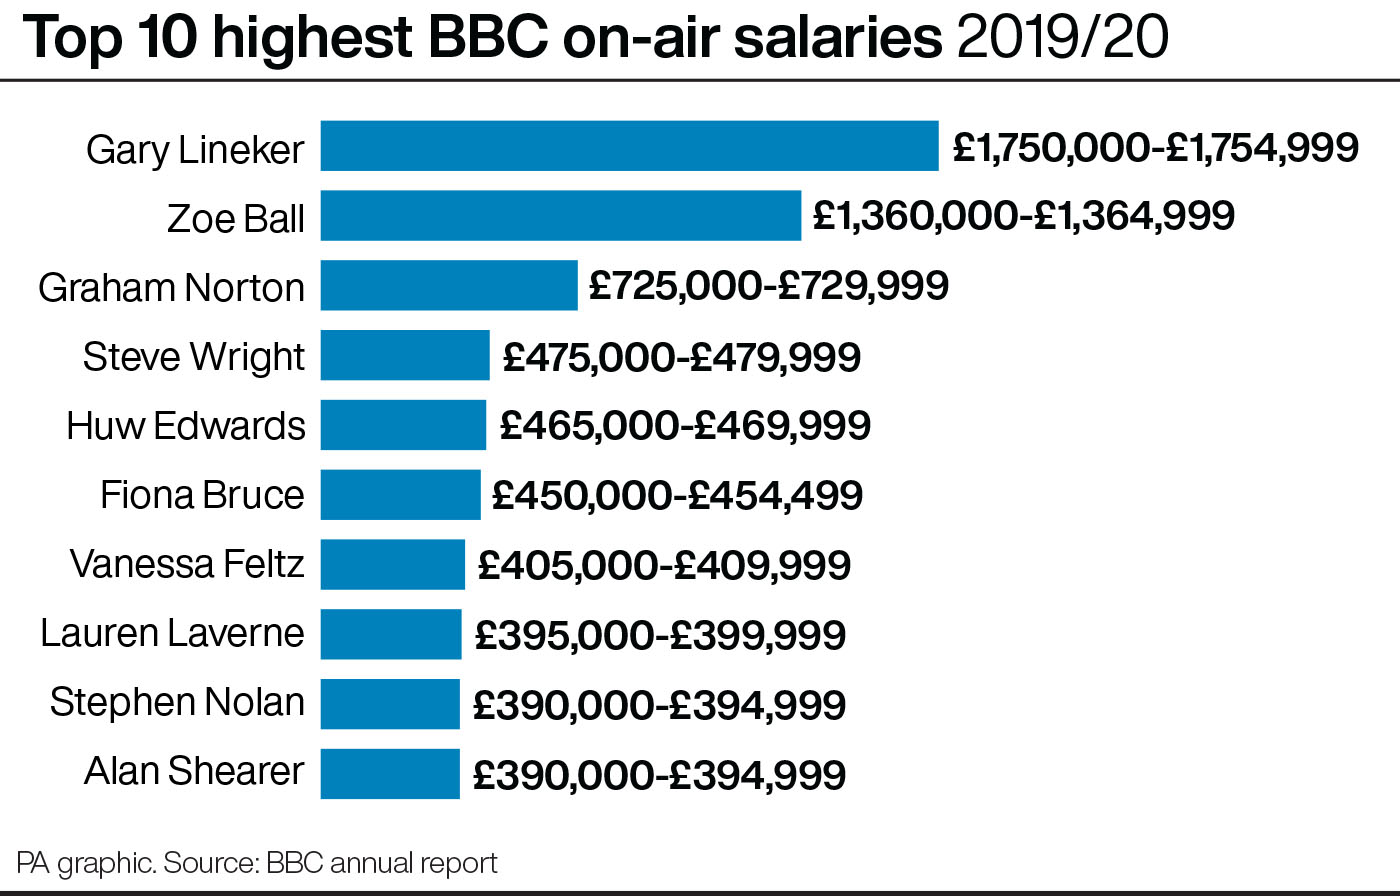 Top 10 highest BBC on-air salaries 2019/20